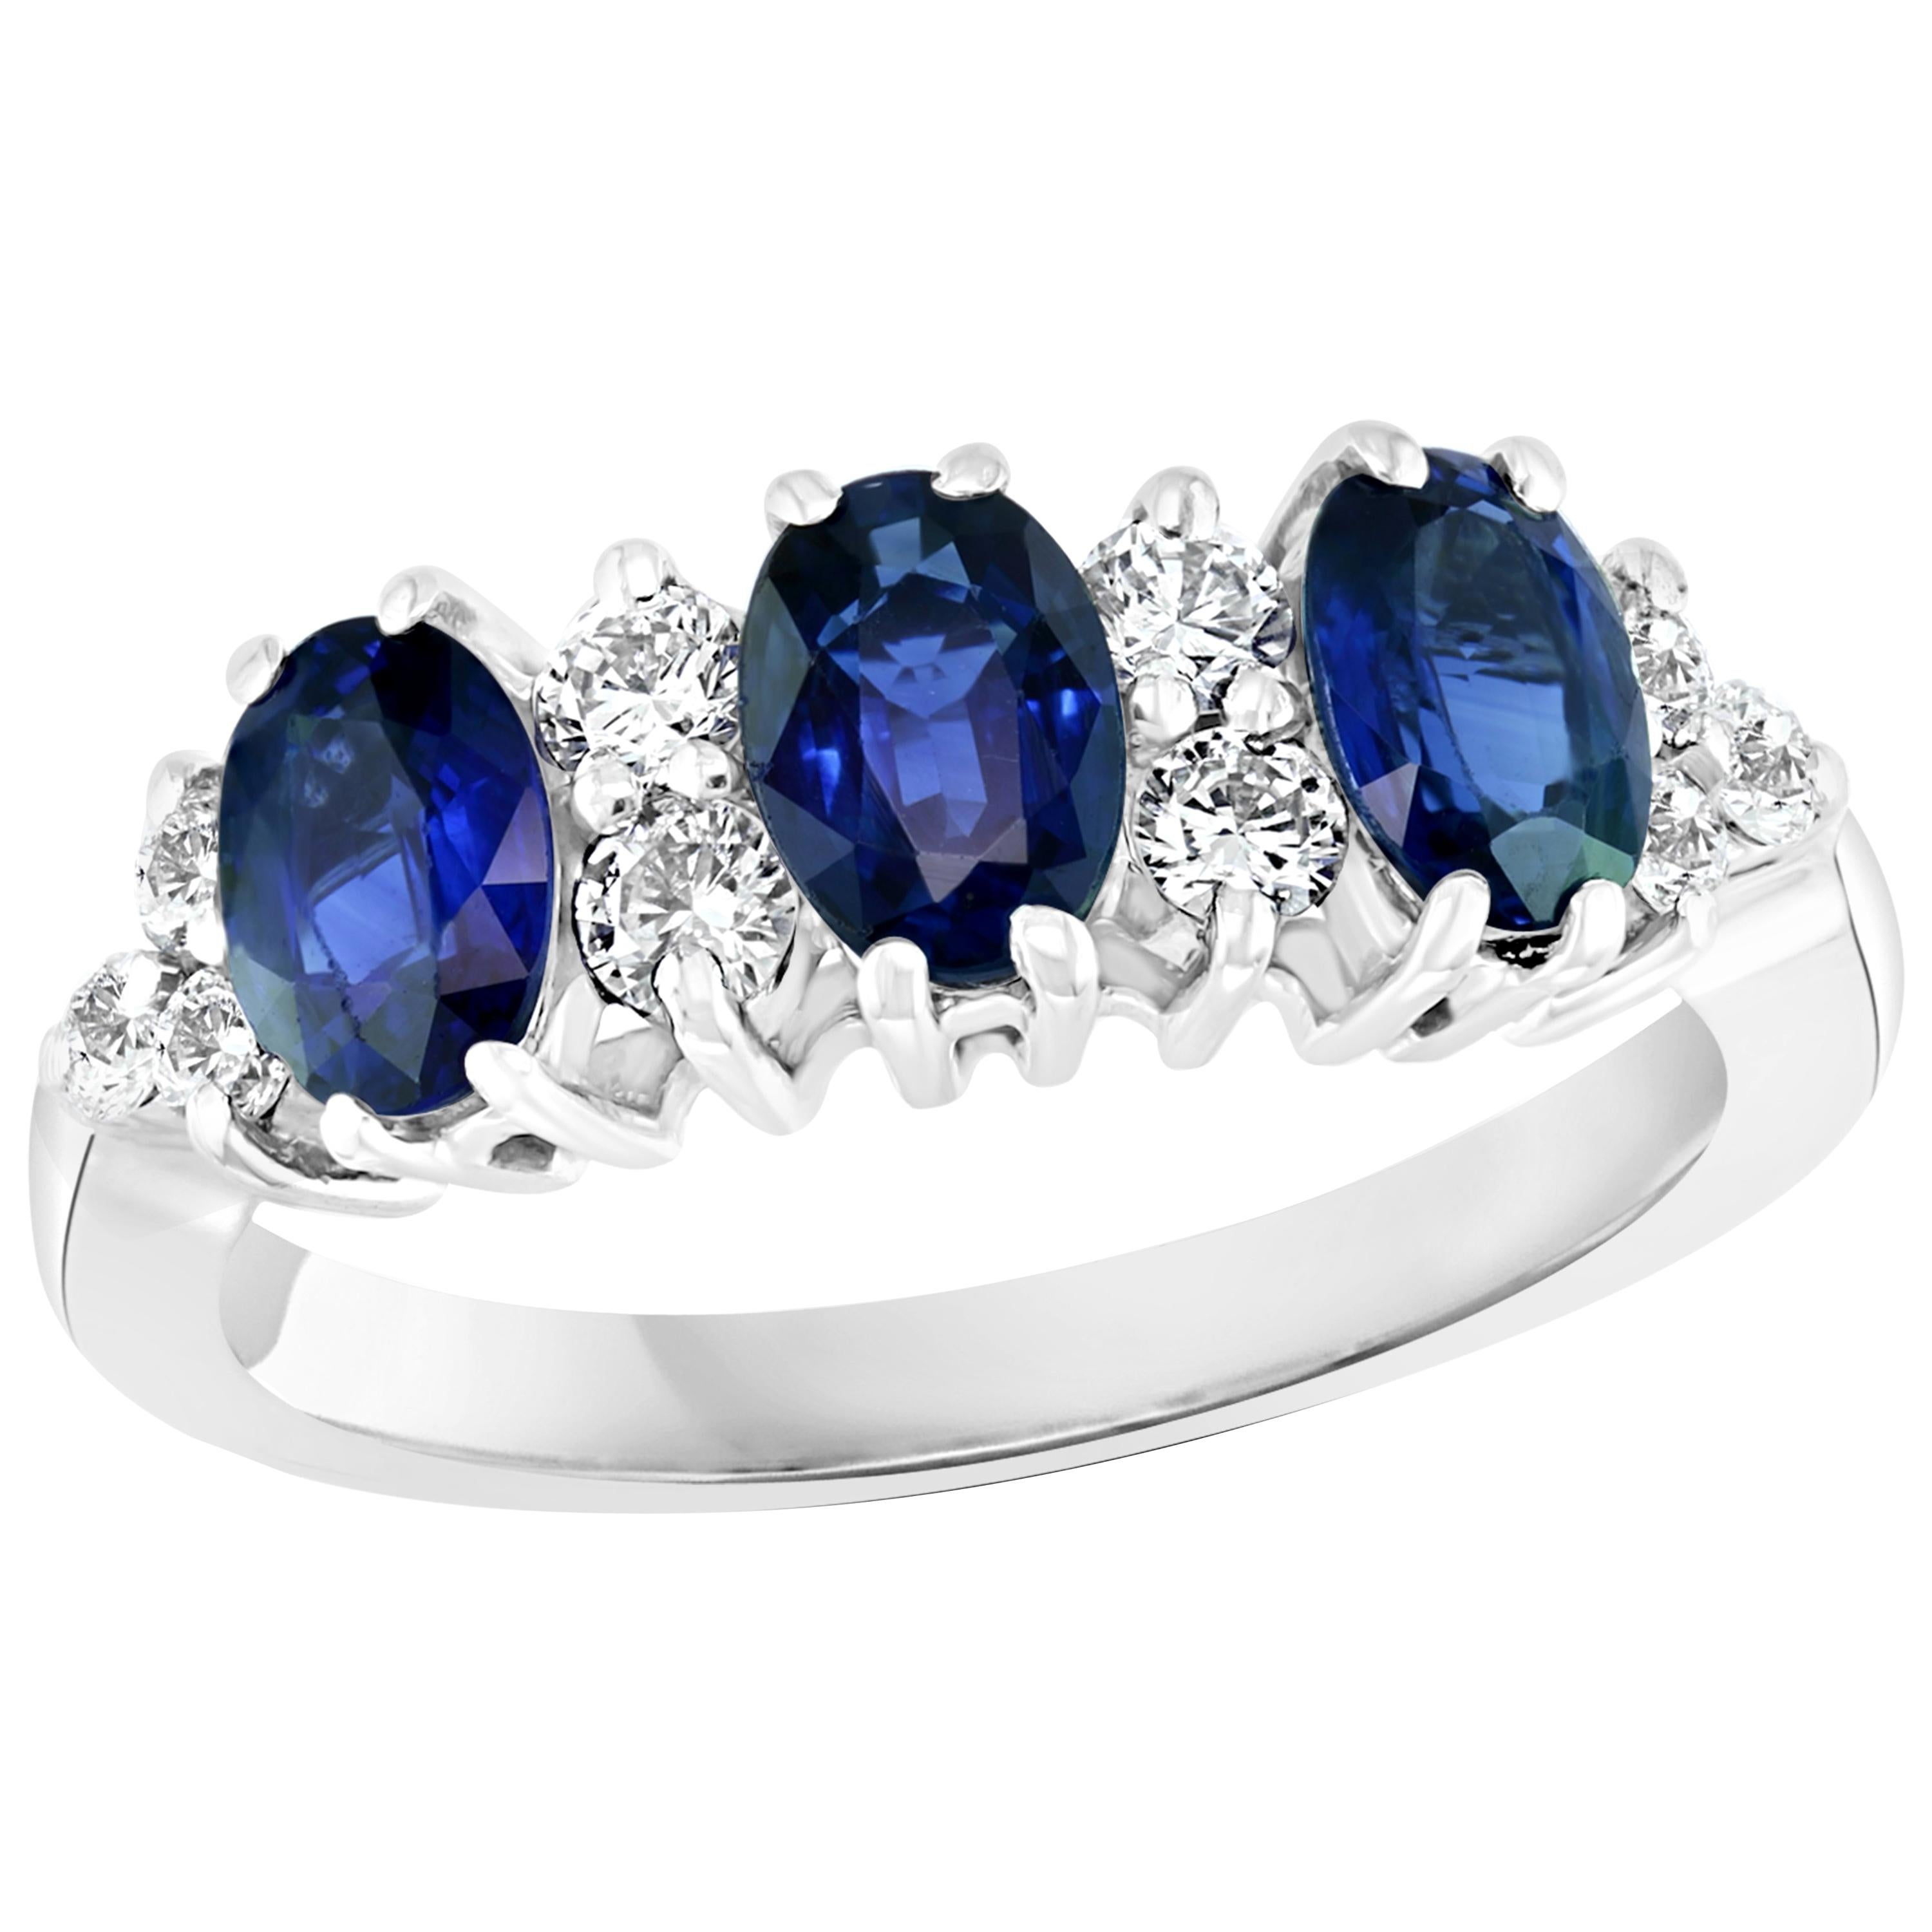 2.5Ct Blue Sapphire & 0.6 Ct Diamond Cocktail Ring in 18 Karat White Gold Estate